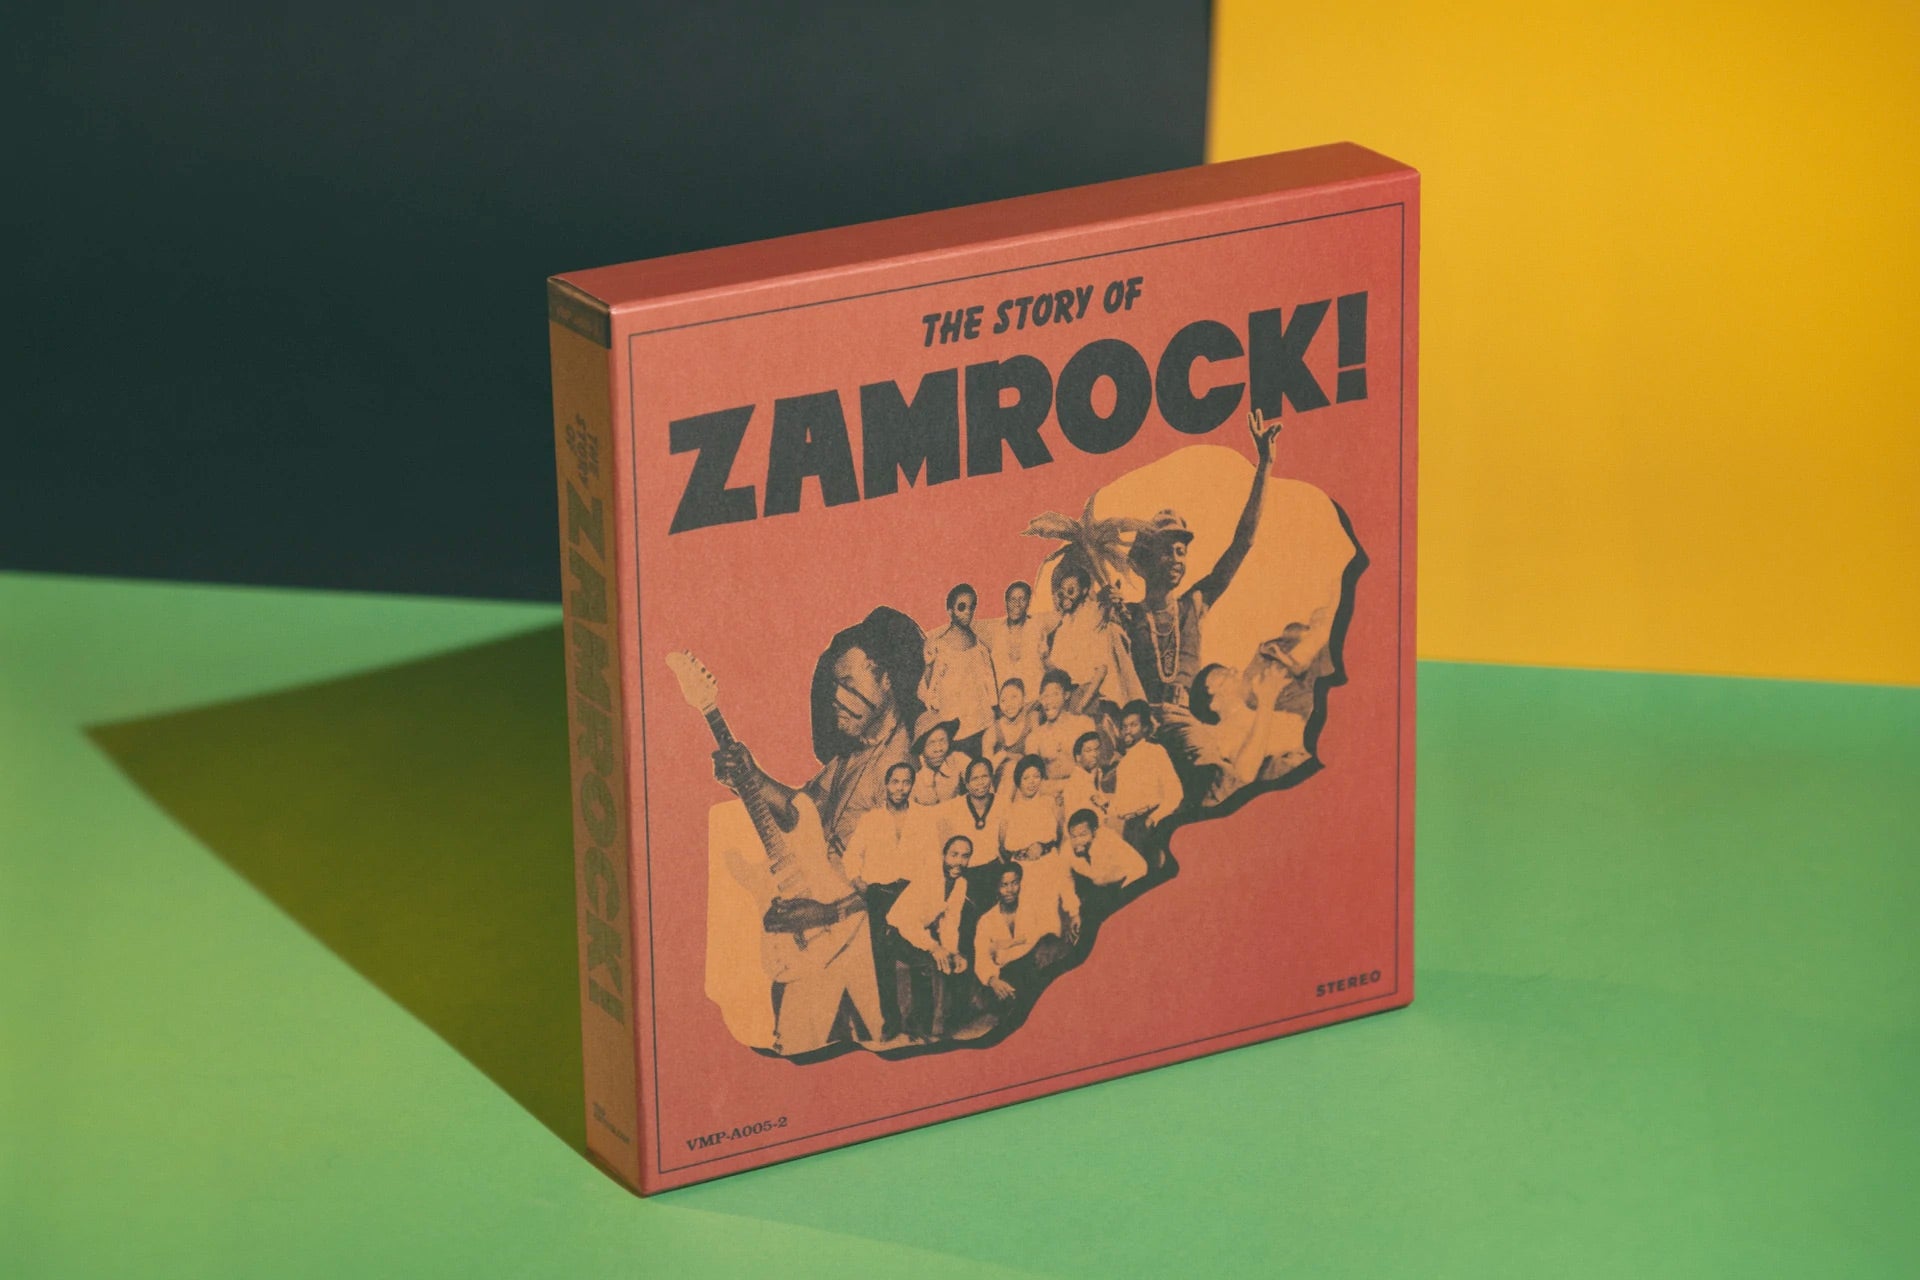 The Story of Zamrock: 8-album box set